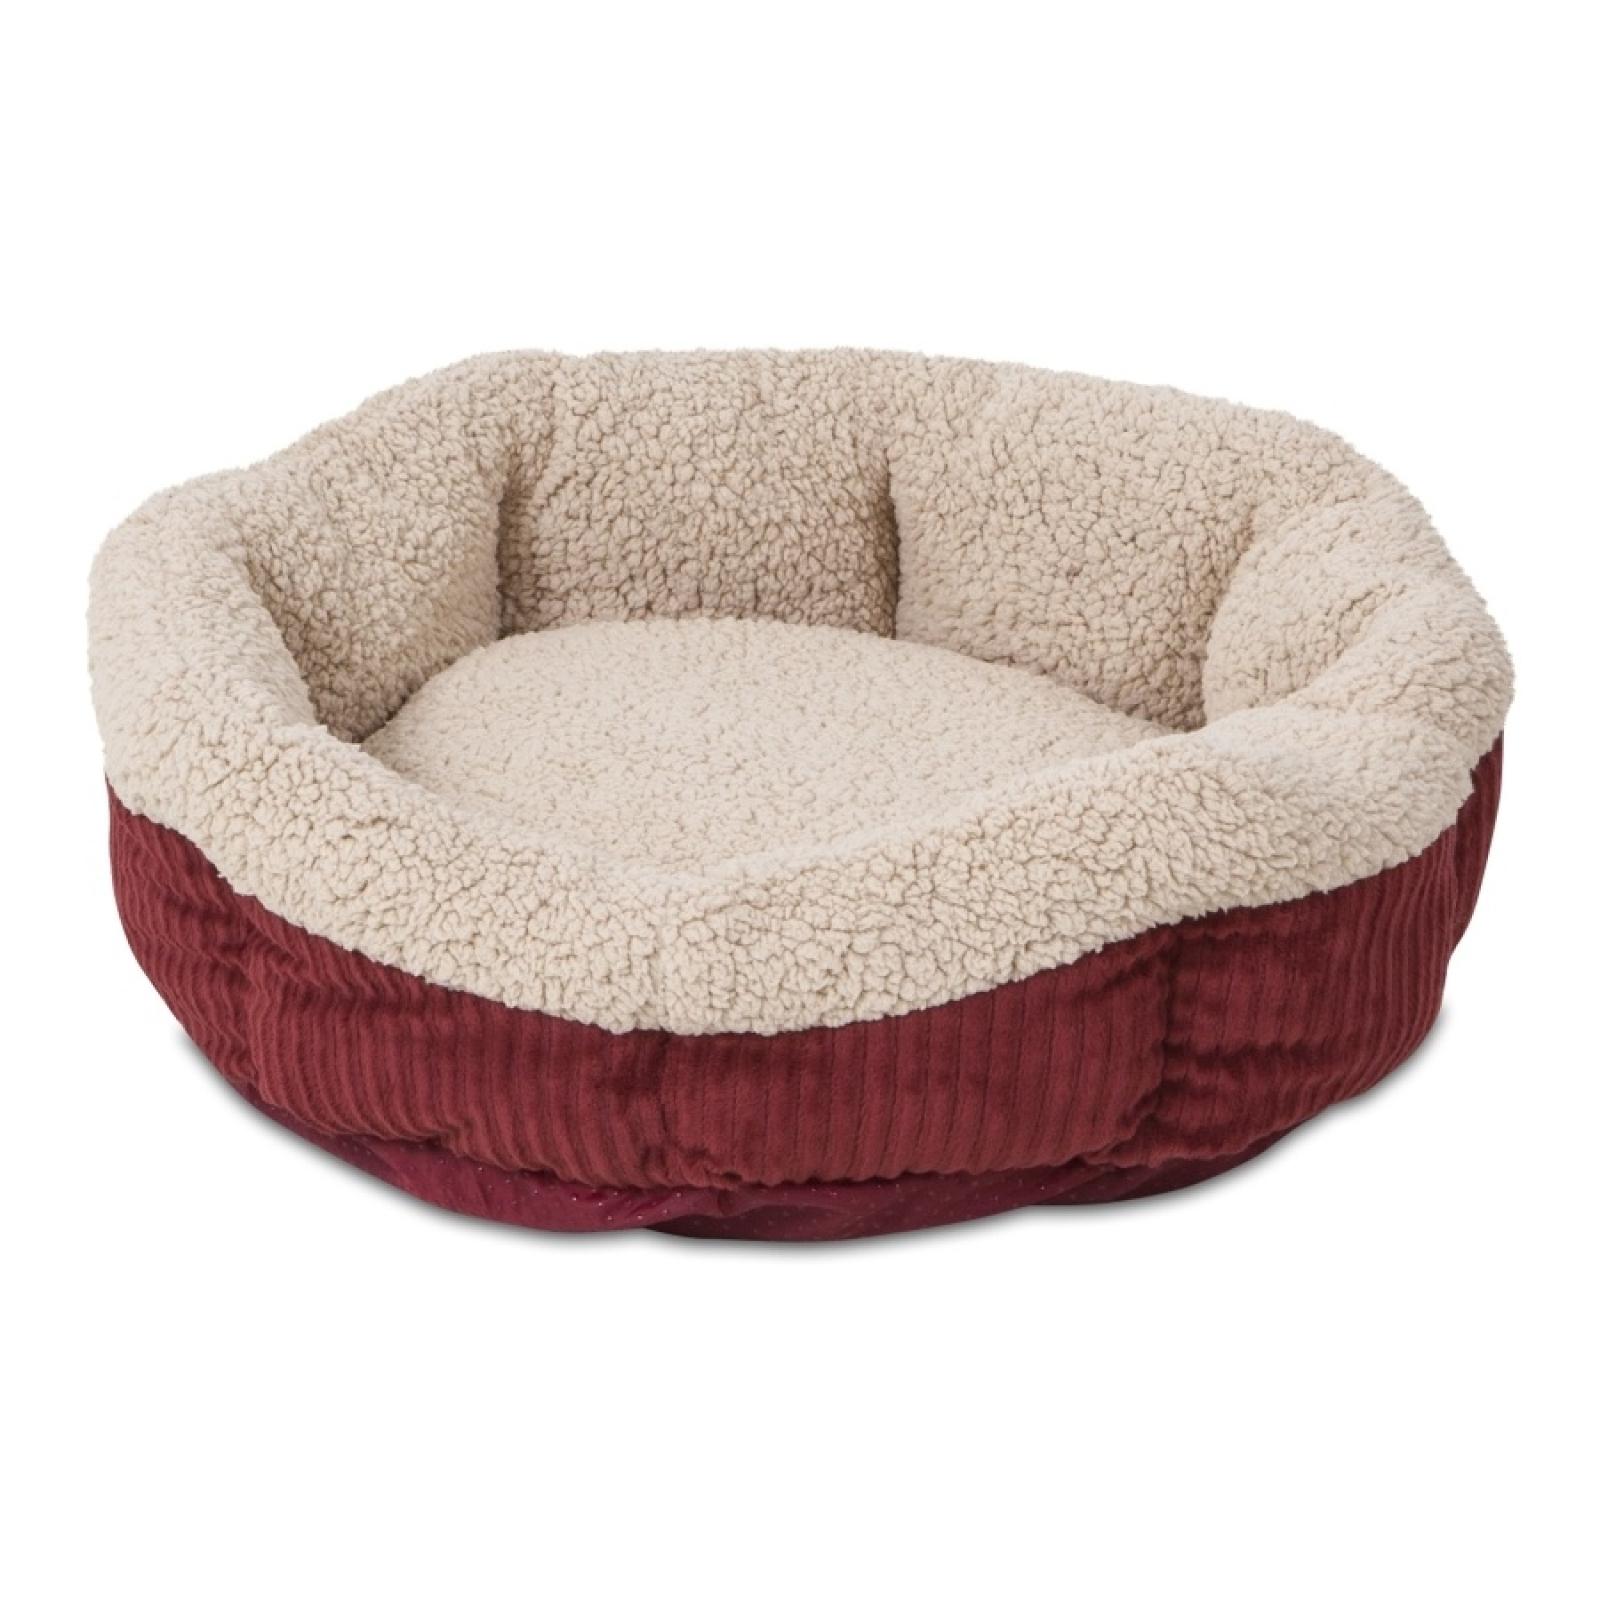 Aspen Pet Self-Warming Oval Lounger Pet Bed